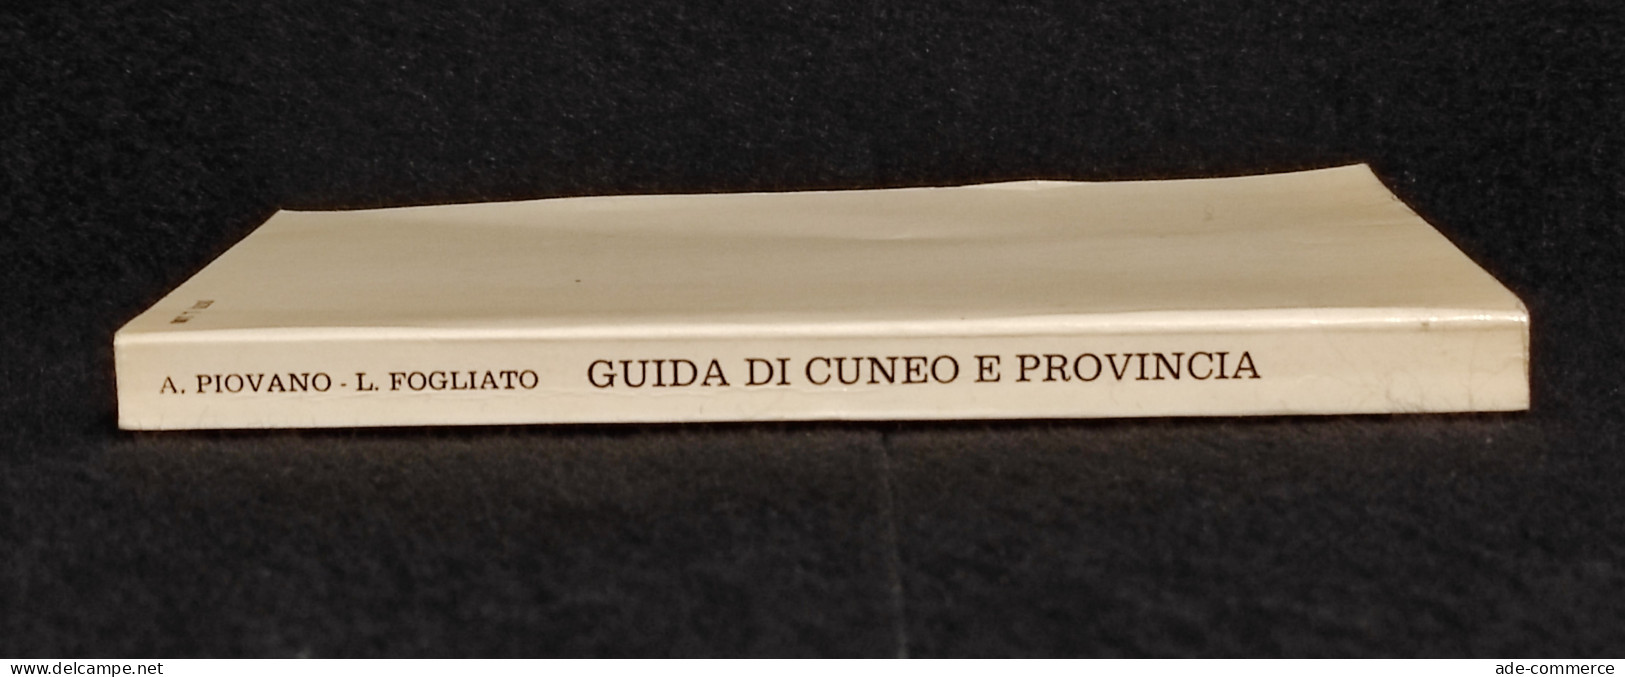 Guida Di Cuneo E Provincia - Turismo Storia-Arte - Ed. Gribaudo - 1977 - Turismo, Viajes